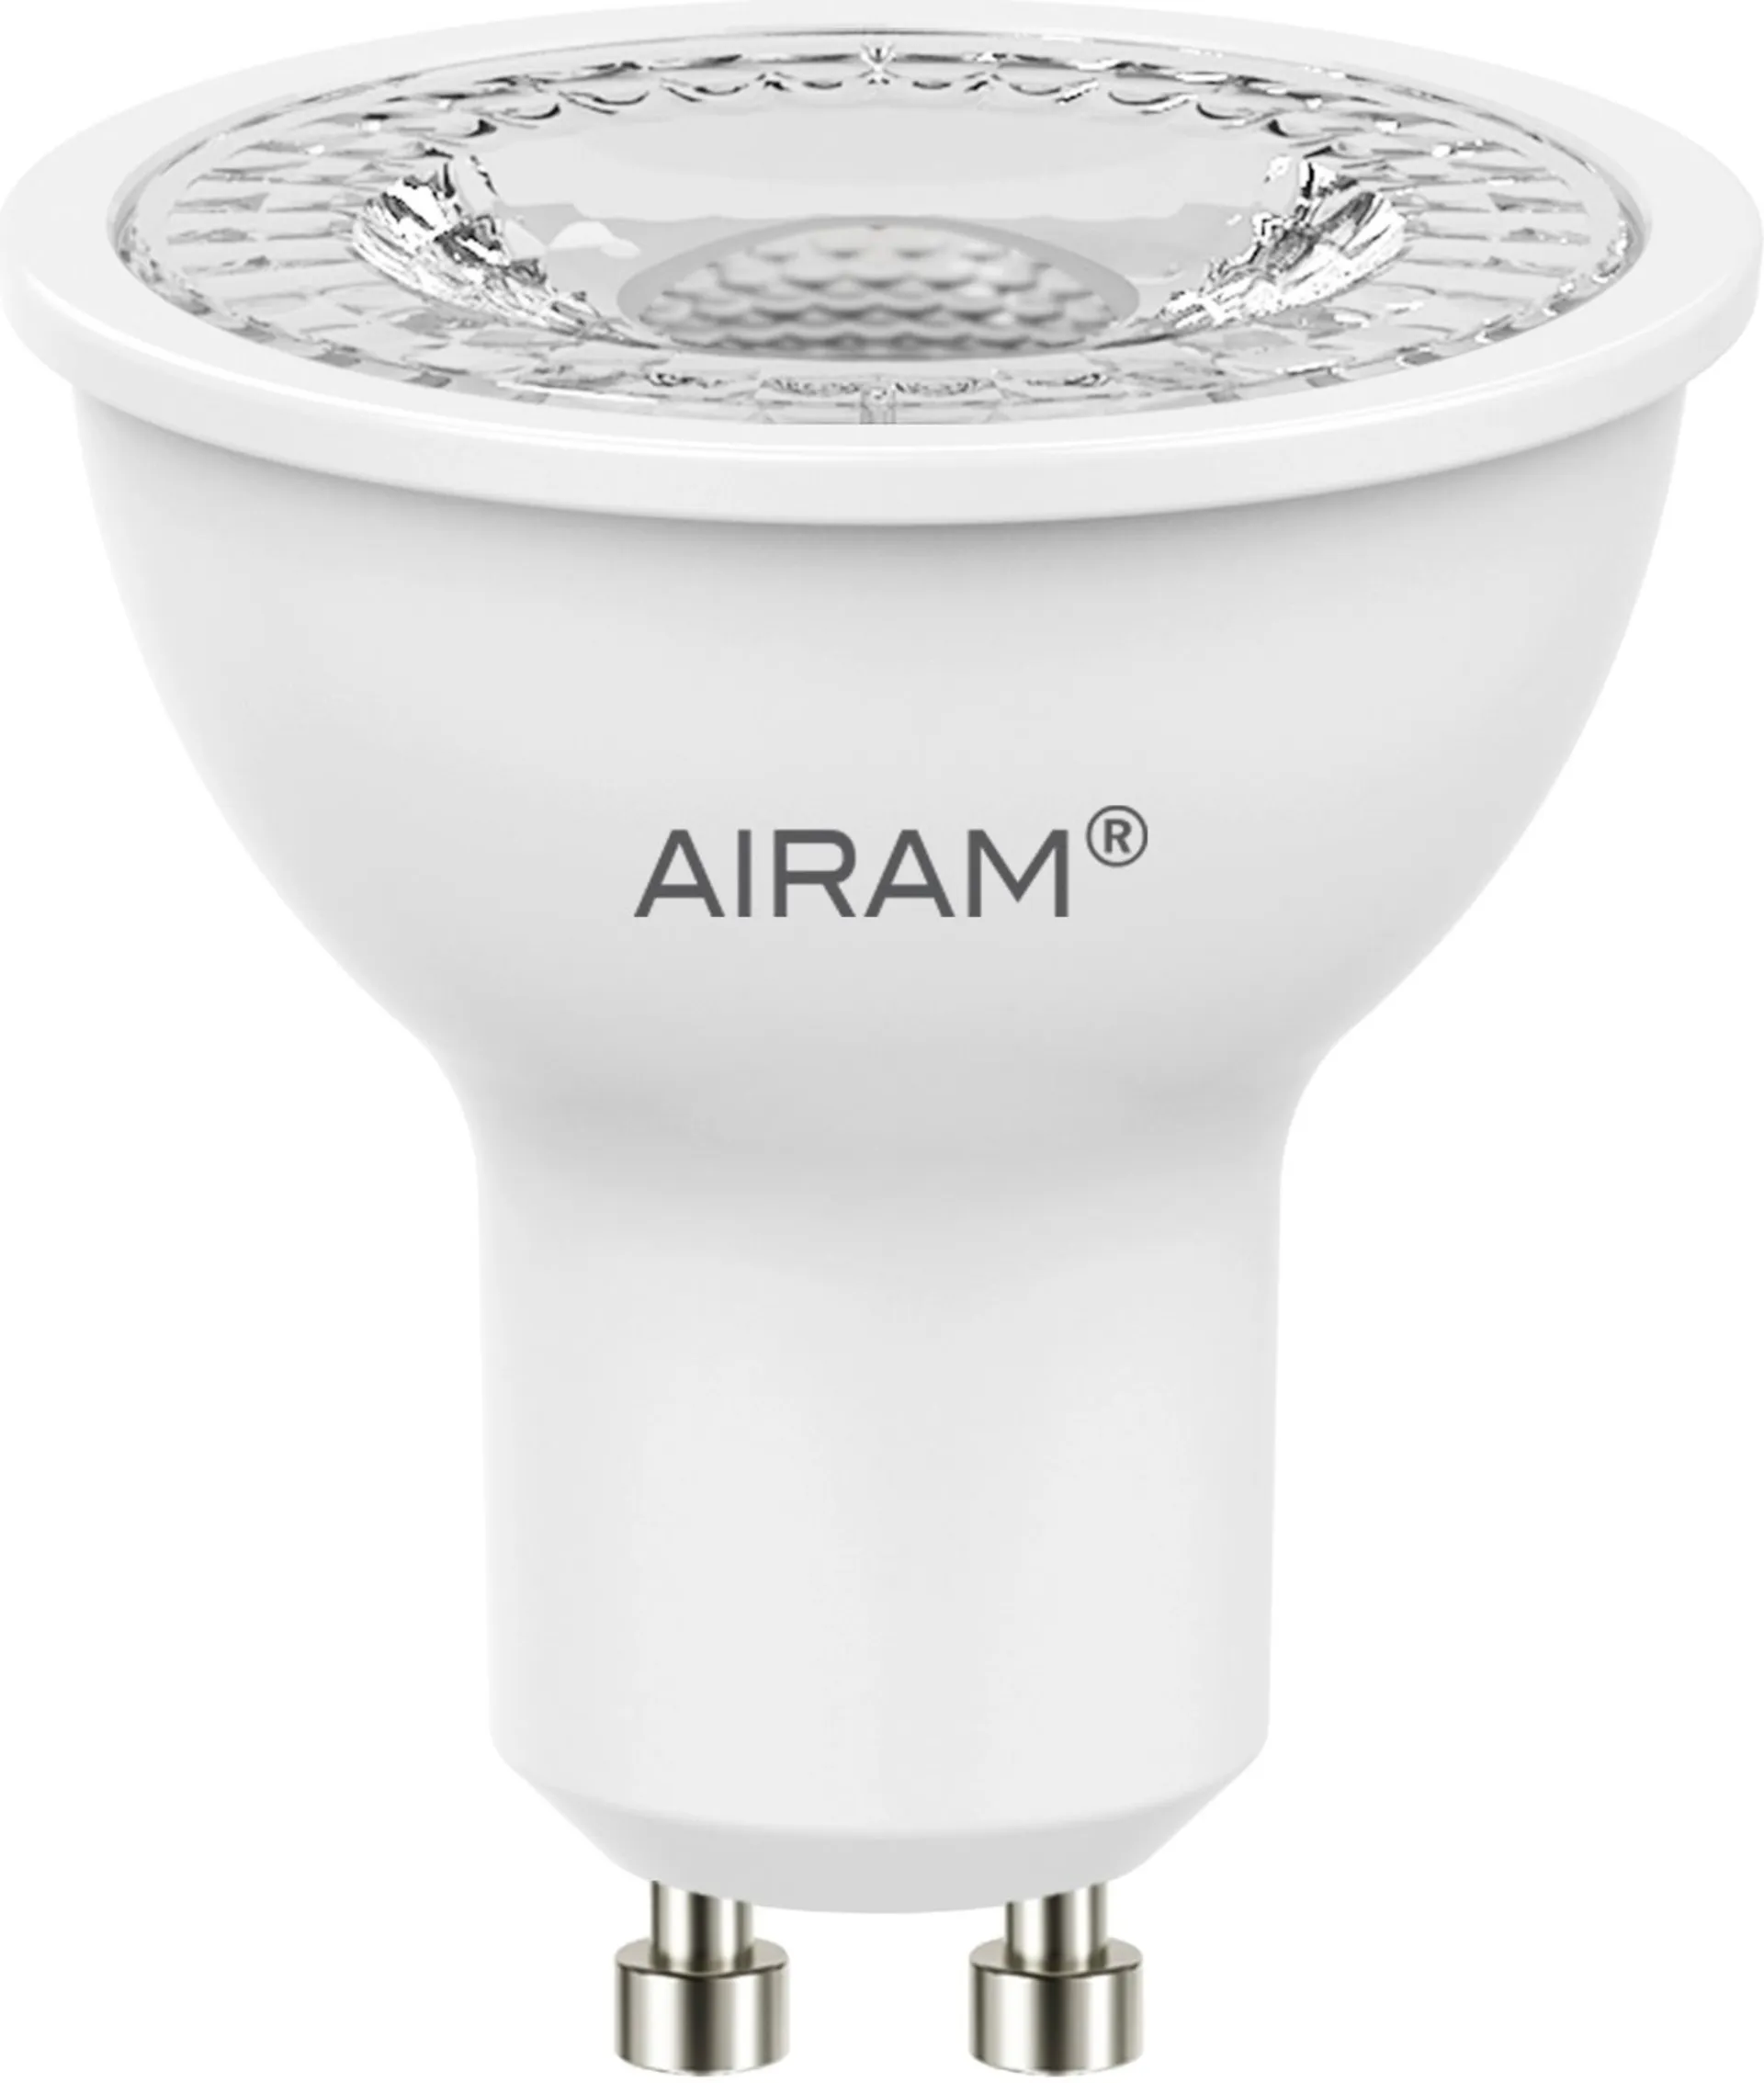 Airam LED kohdelamppu 5W GU10 PAR16 390LM 4000K